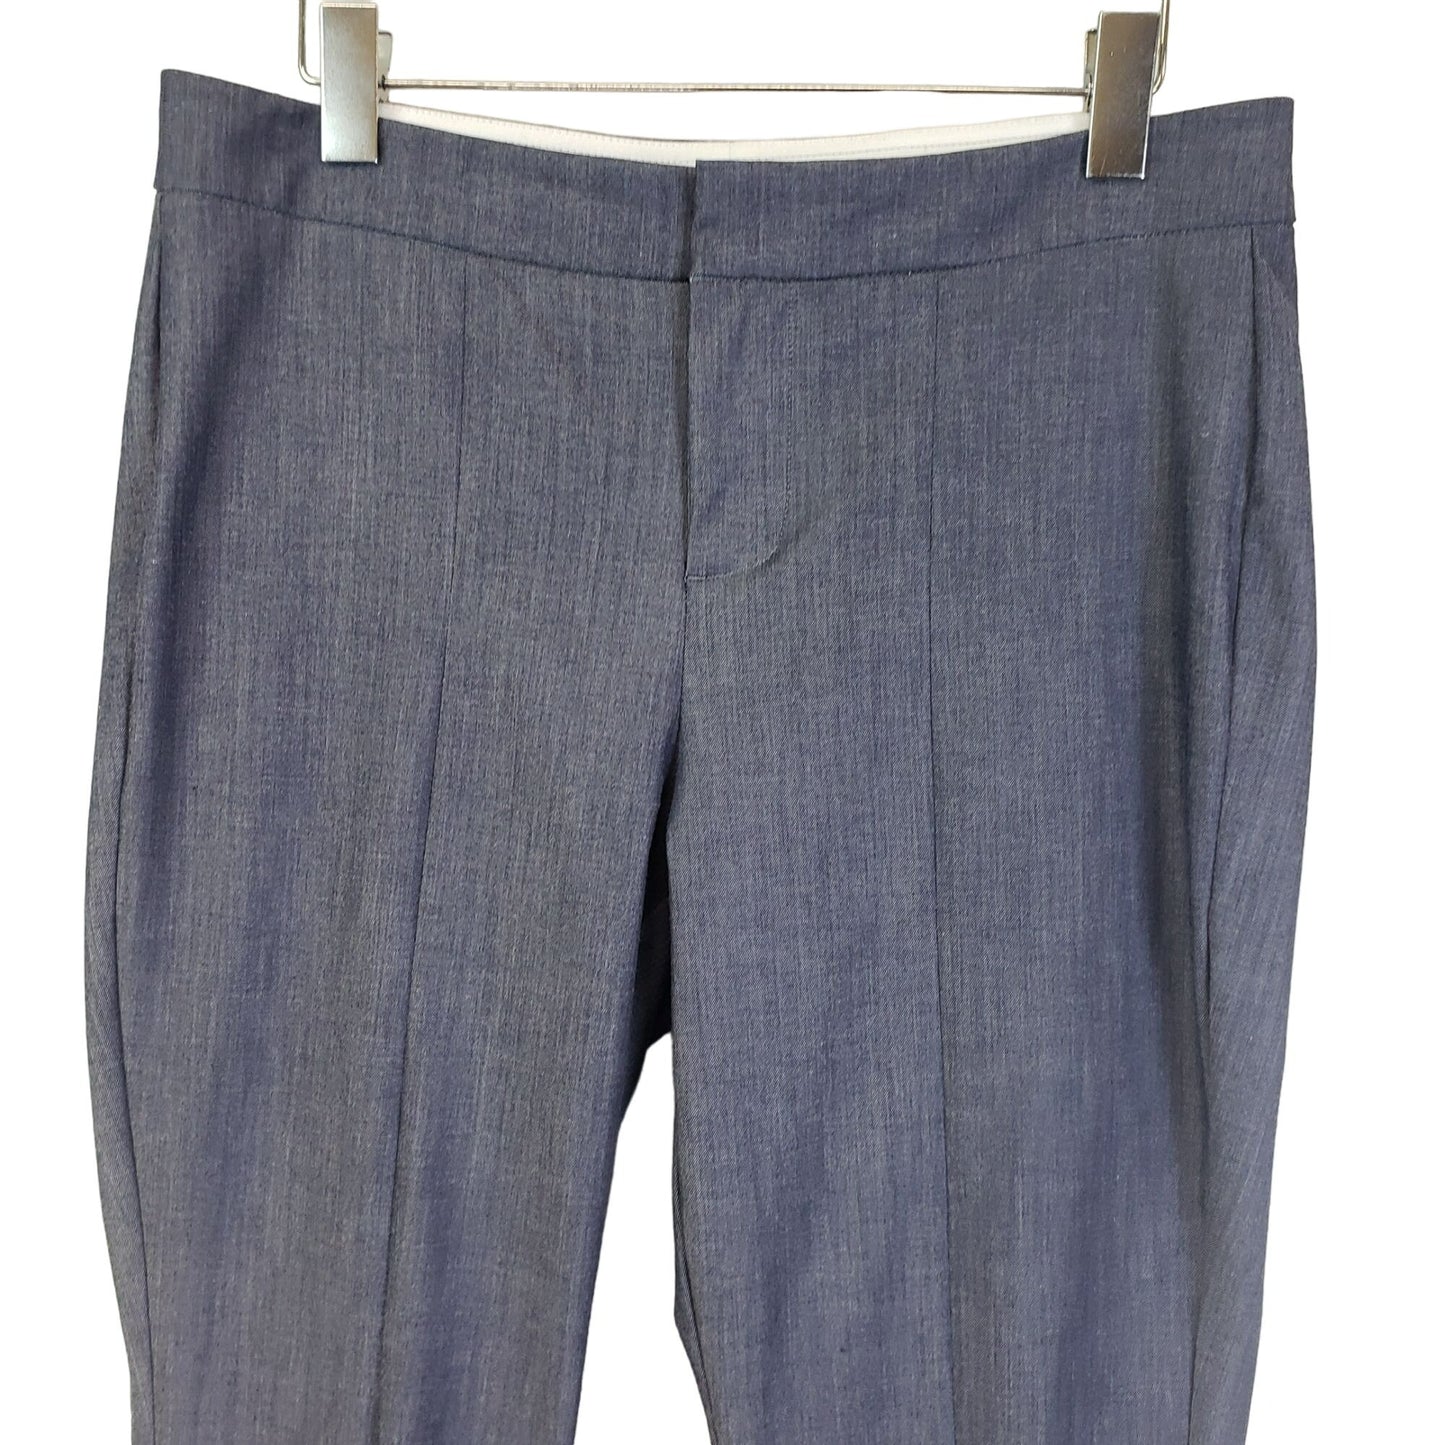 Ecru Heathered Blue Trouser Pants Size 8